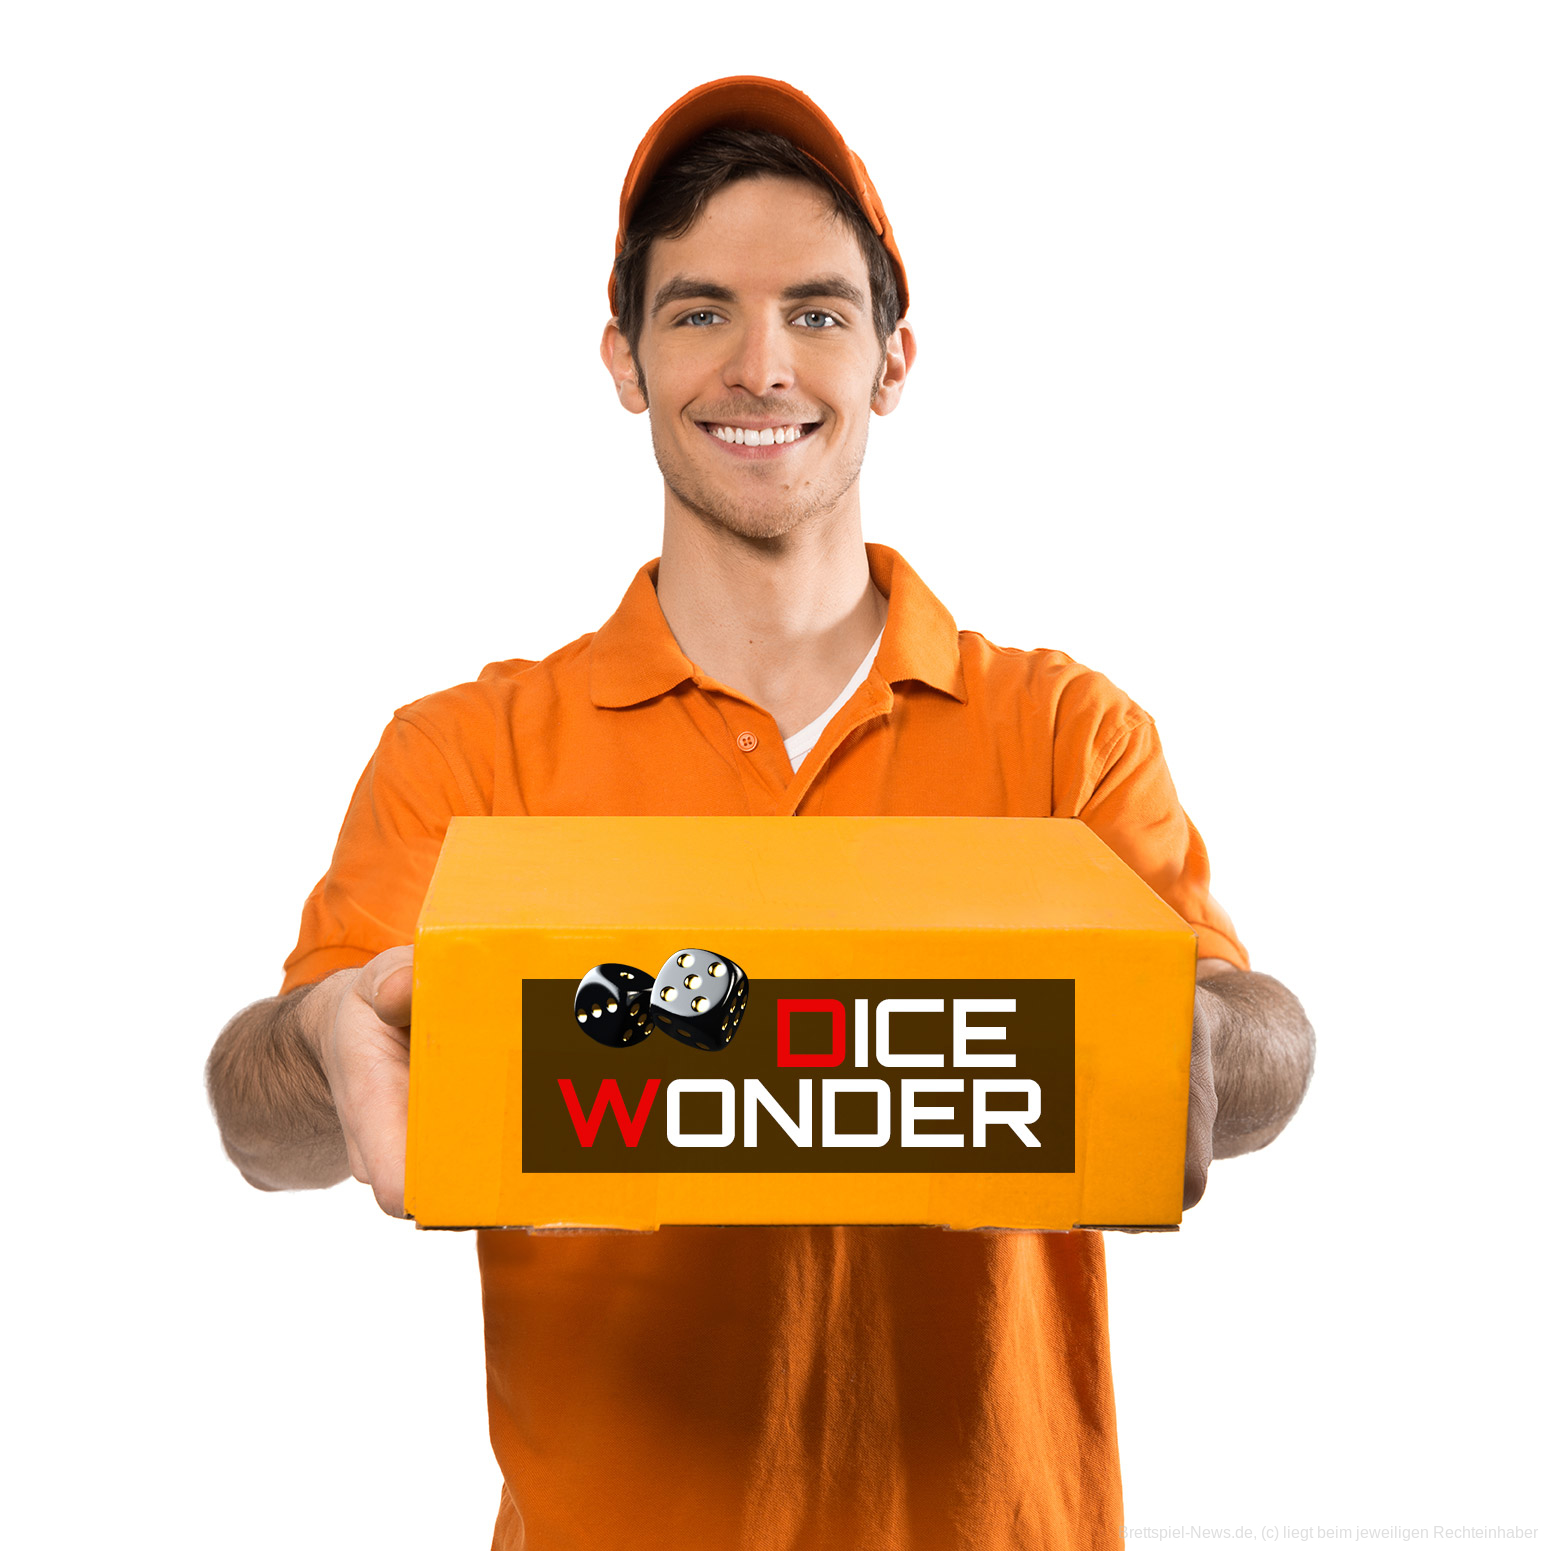 dice wonder3